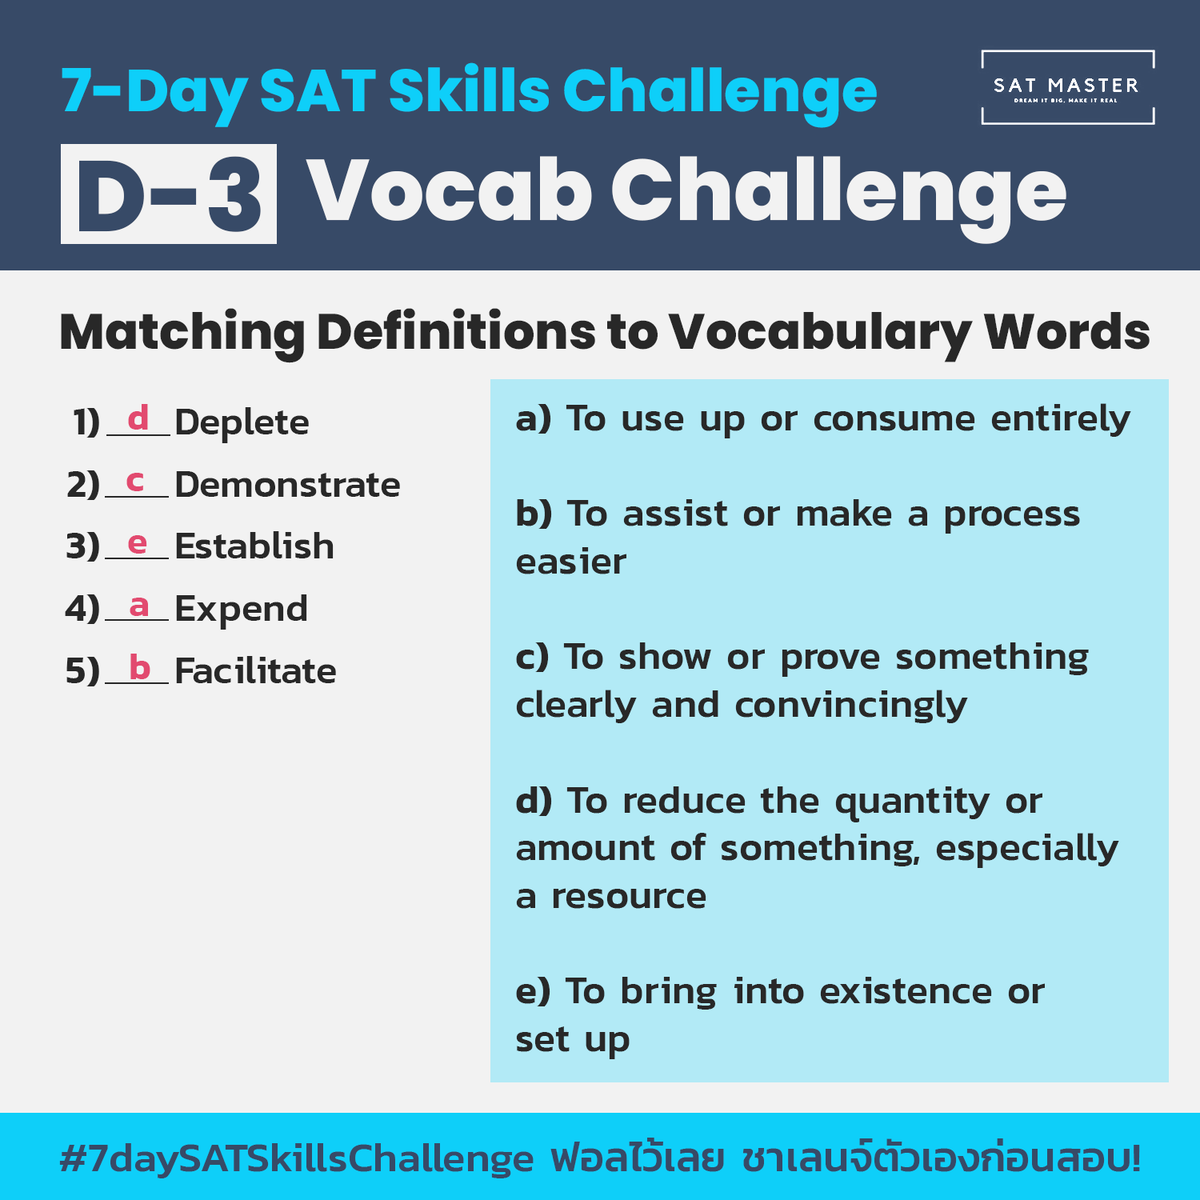 🔥#7Day_SAT_Skill_Challenge #Day3 🎯
วันนี้มาทำ Vovab กัน คำไหนใช้กับประโยคไหน ใครทำได้บ้าง ลองซิ๊!

ใกล้สอบเข้าไปทุกทึ วันนี้พี่ๆมาชวนทำโจทย์ไปด้วยกัน
โค้งสุดท้ายแล้ว มี SAT Master ติวเป็นเพื่อนน๊า ❤
👍กดติดตามช่องเราไว้ แล้วมาอัปเดต 4 โมงเย็นทุกวัน
.
Line@ : @SatMaster